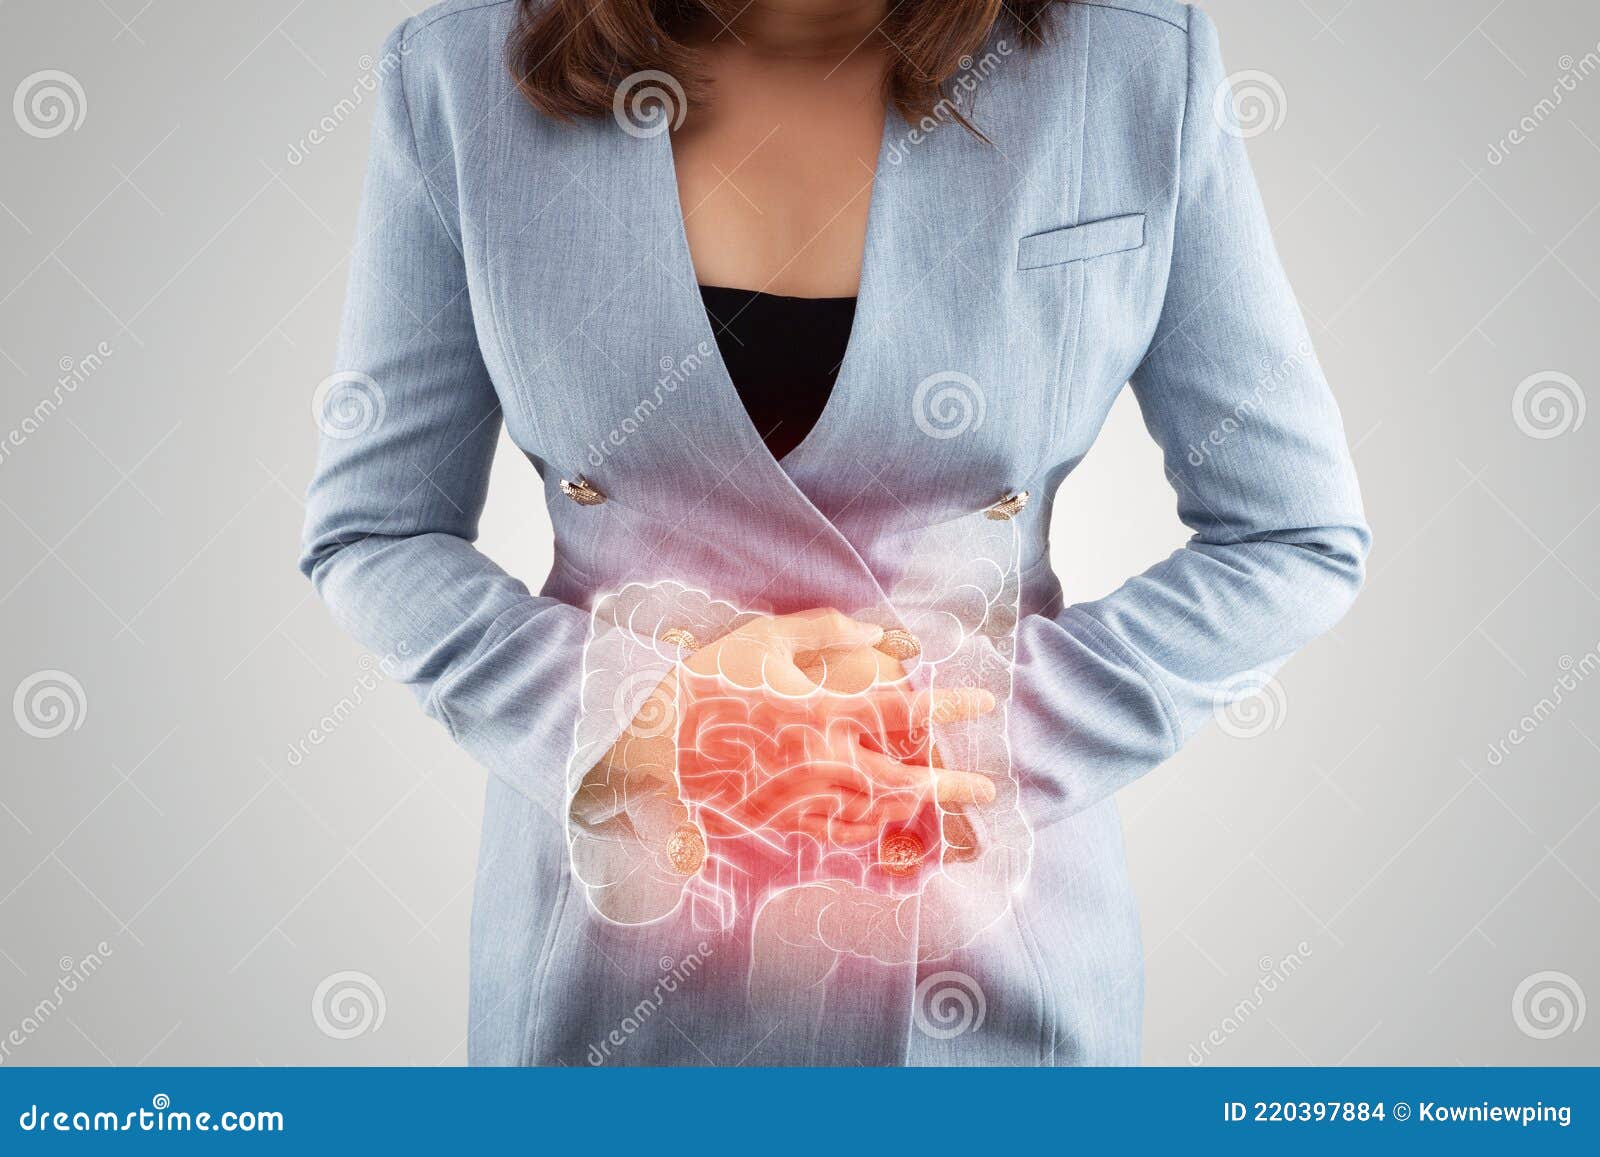 large intestine. inflammatory bowel disease